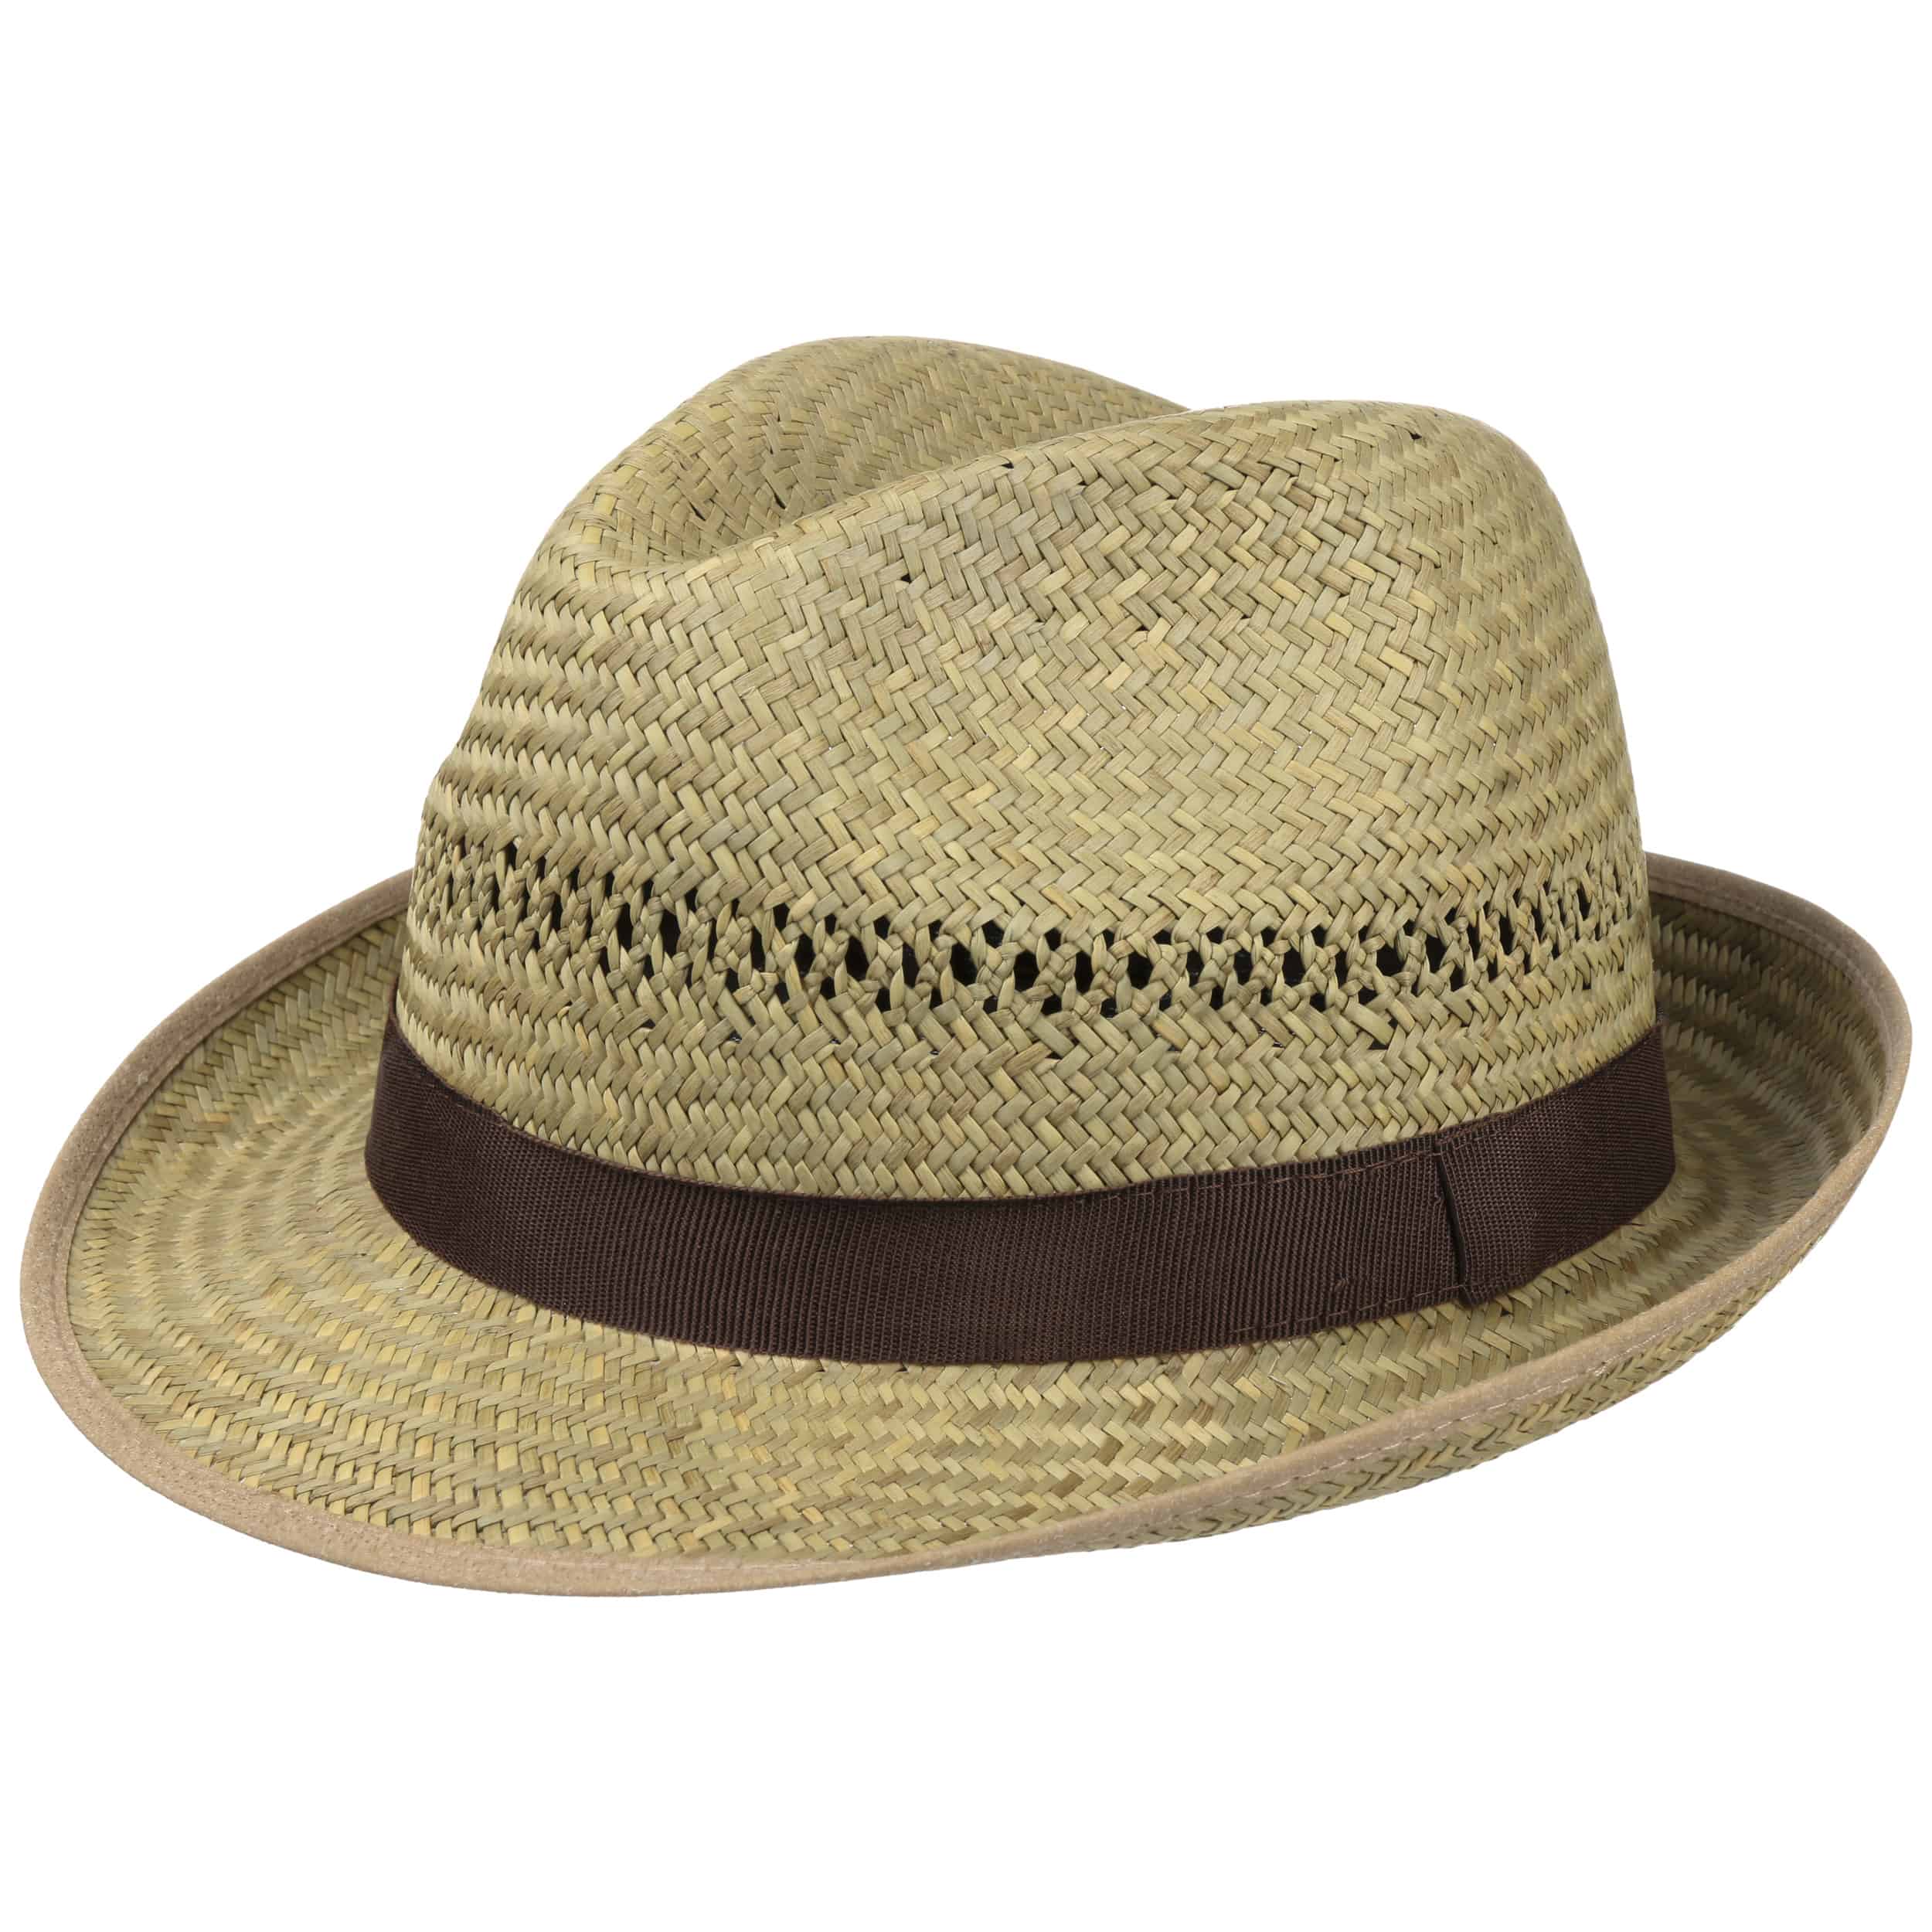 Classic Straw Trilby Hat by Lipodo Col. Nature, Size XL (60-61 cm)